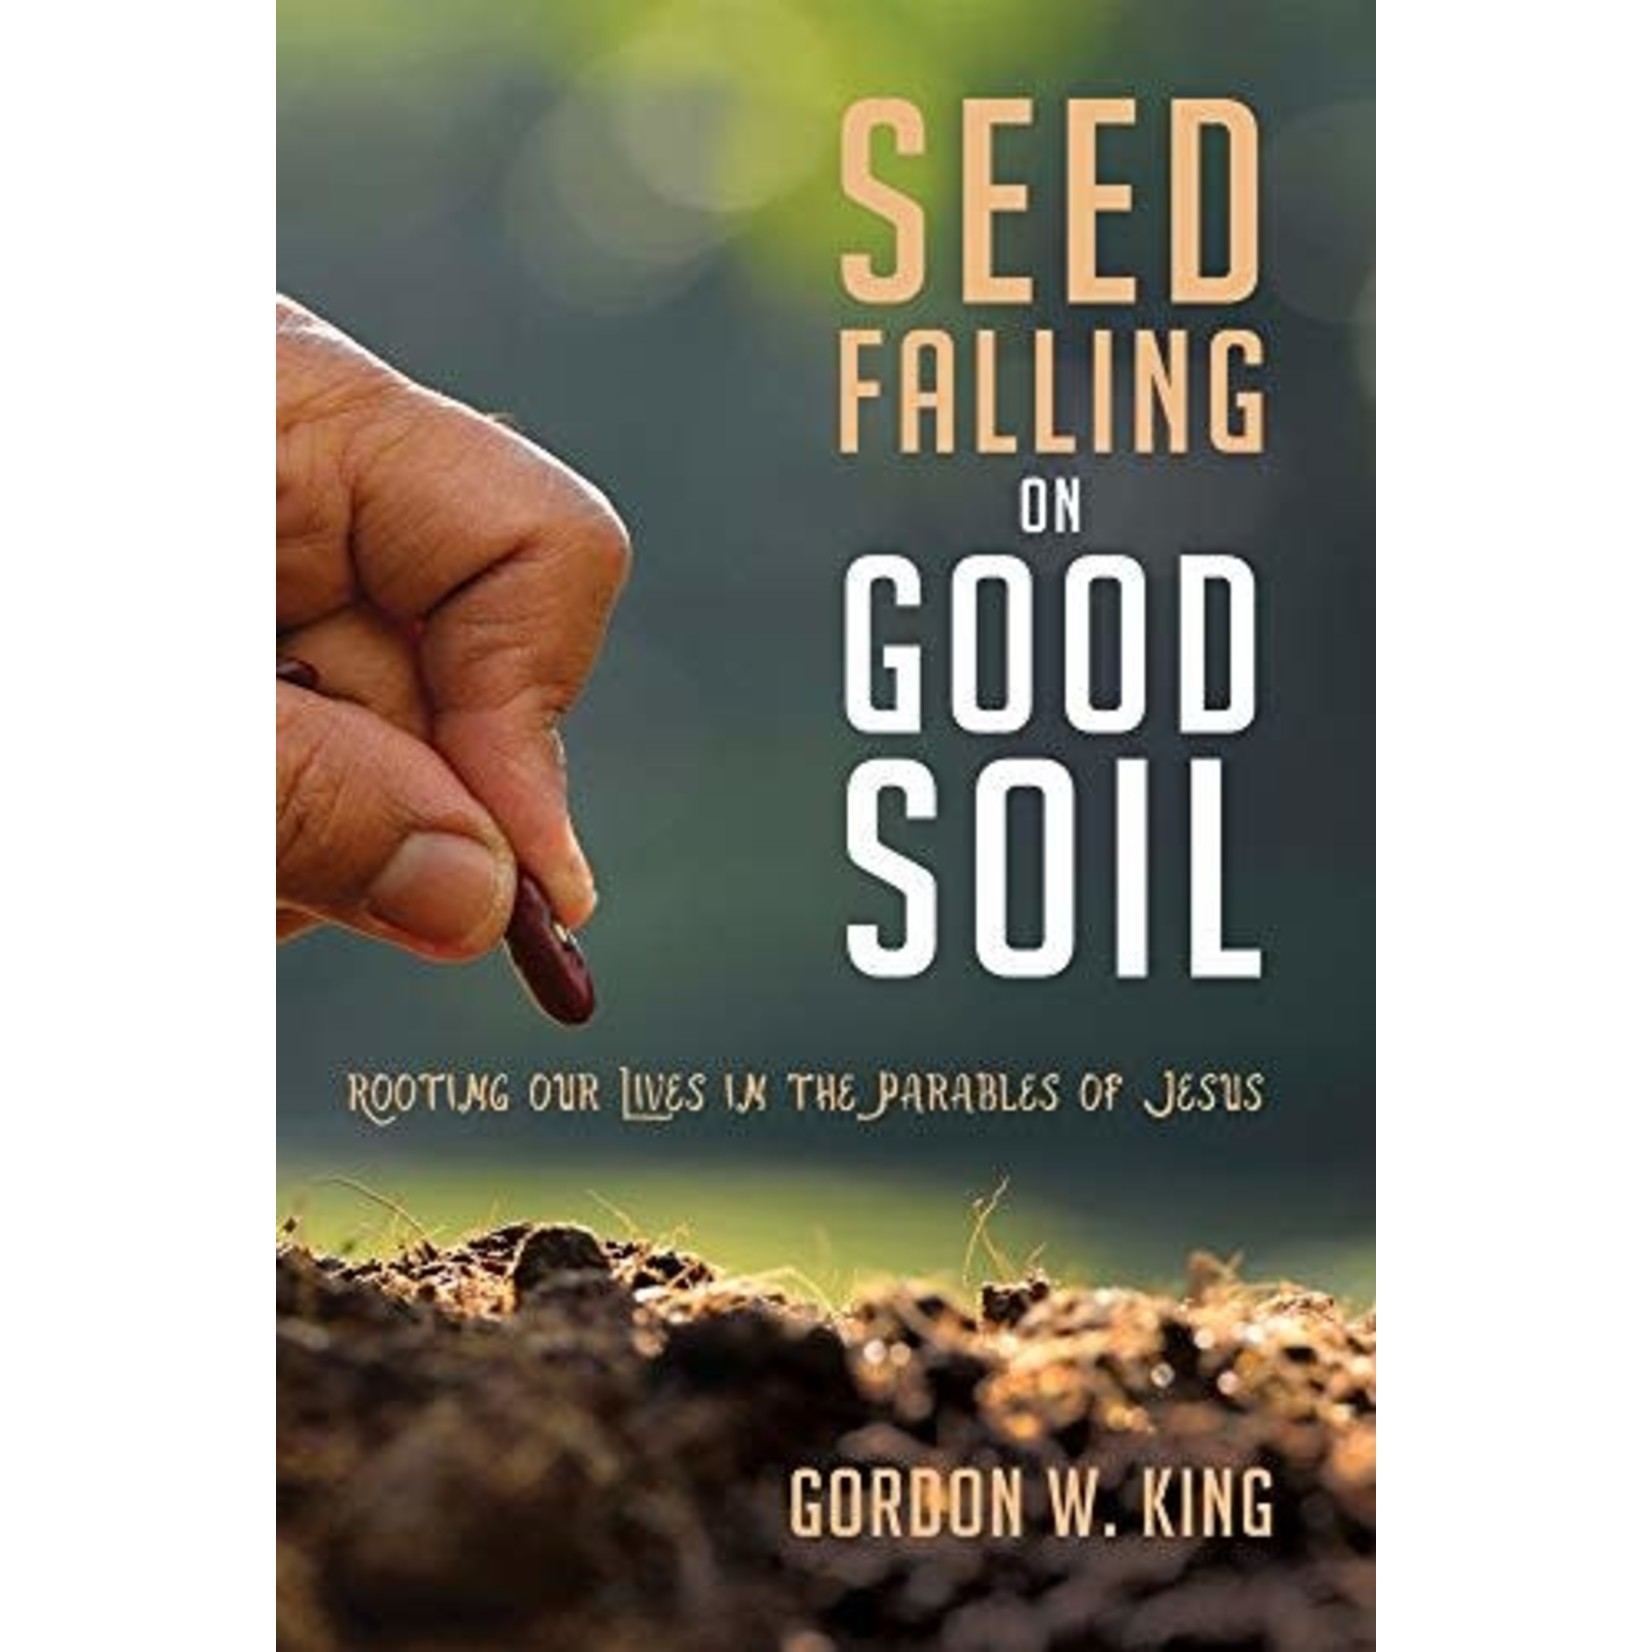 Seed Falling on Good Soil - Gordon W. King